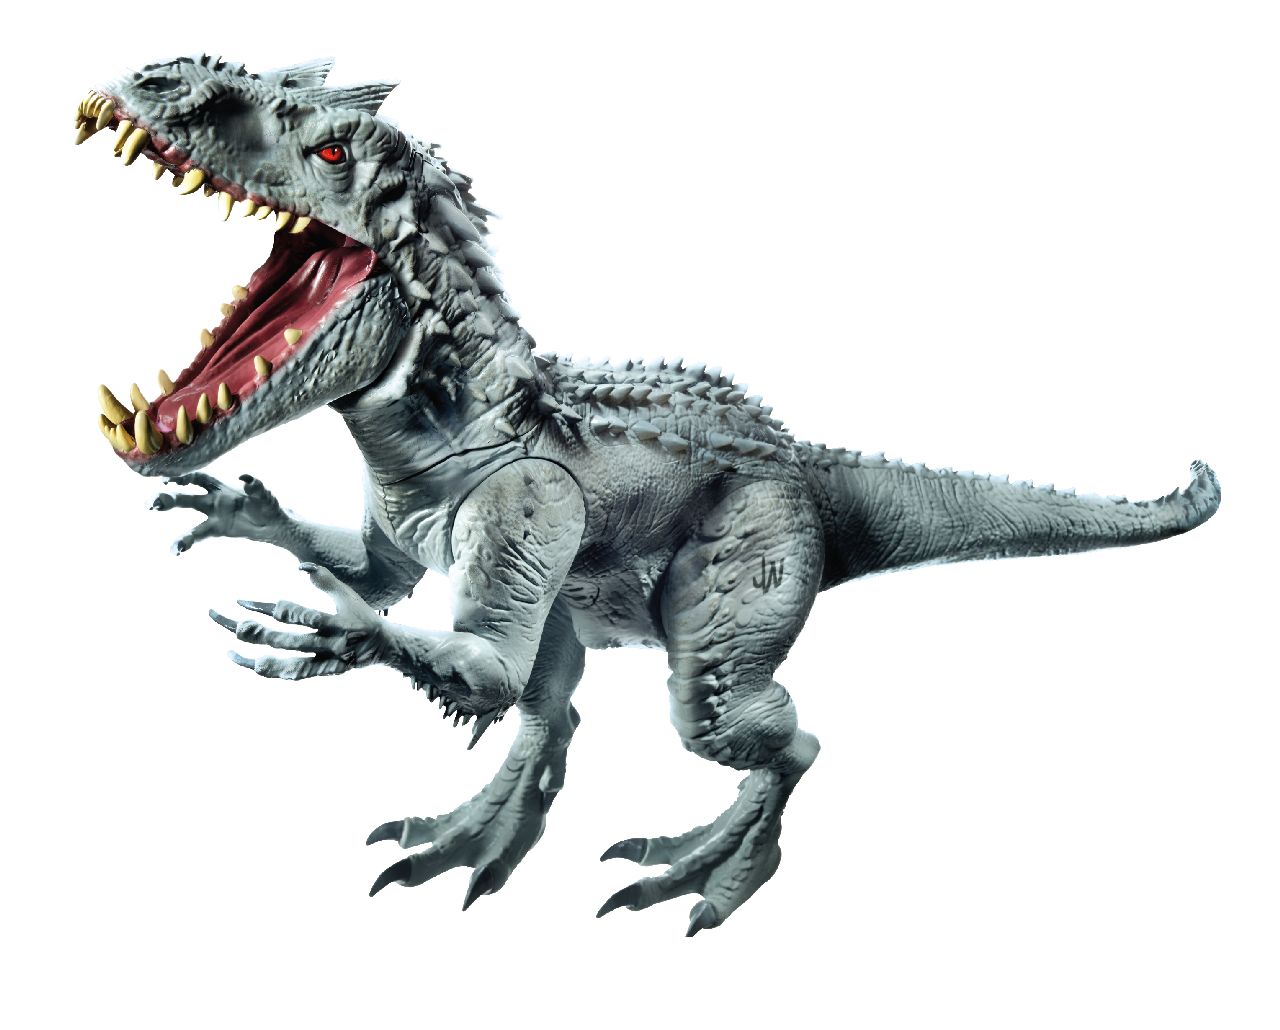 verrader werkloosheid Score Check Out Hasbro's Jurassic World Toys, Including the Indominus Rex